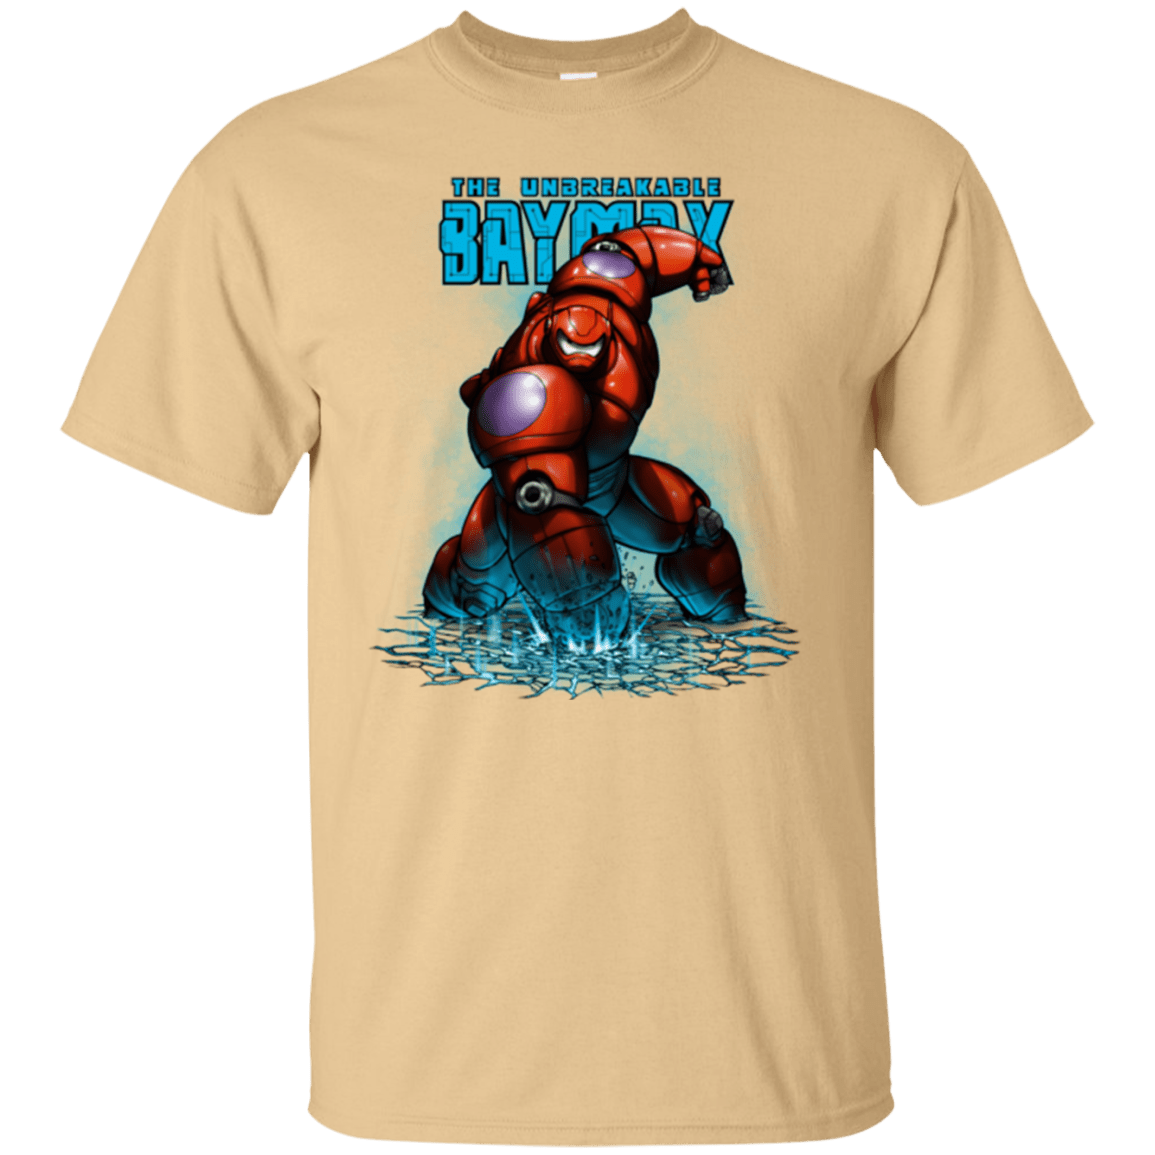 T-Shirts Vegas Gold / Small Unbreakable Hero T-Shirt